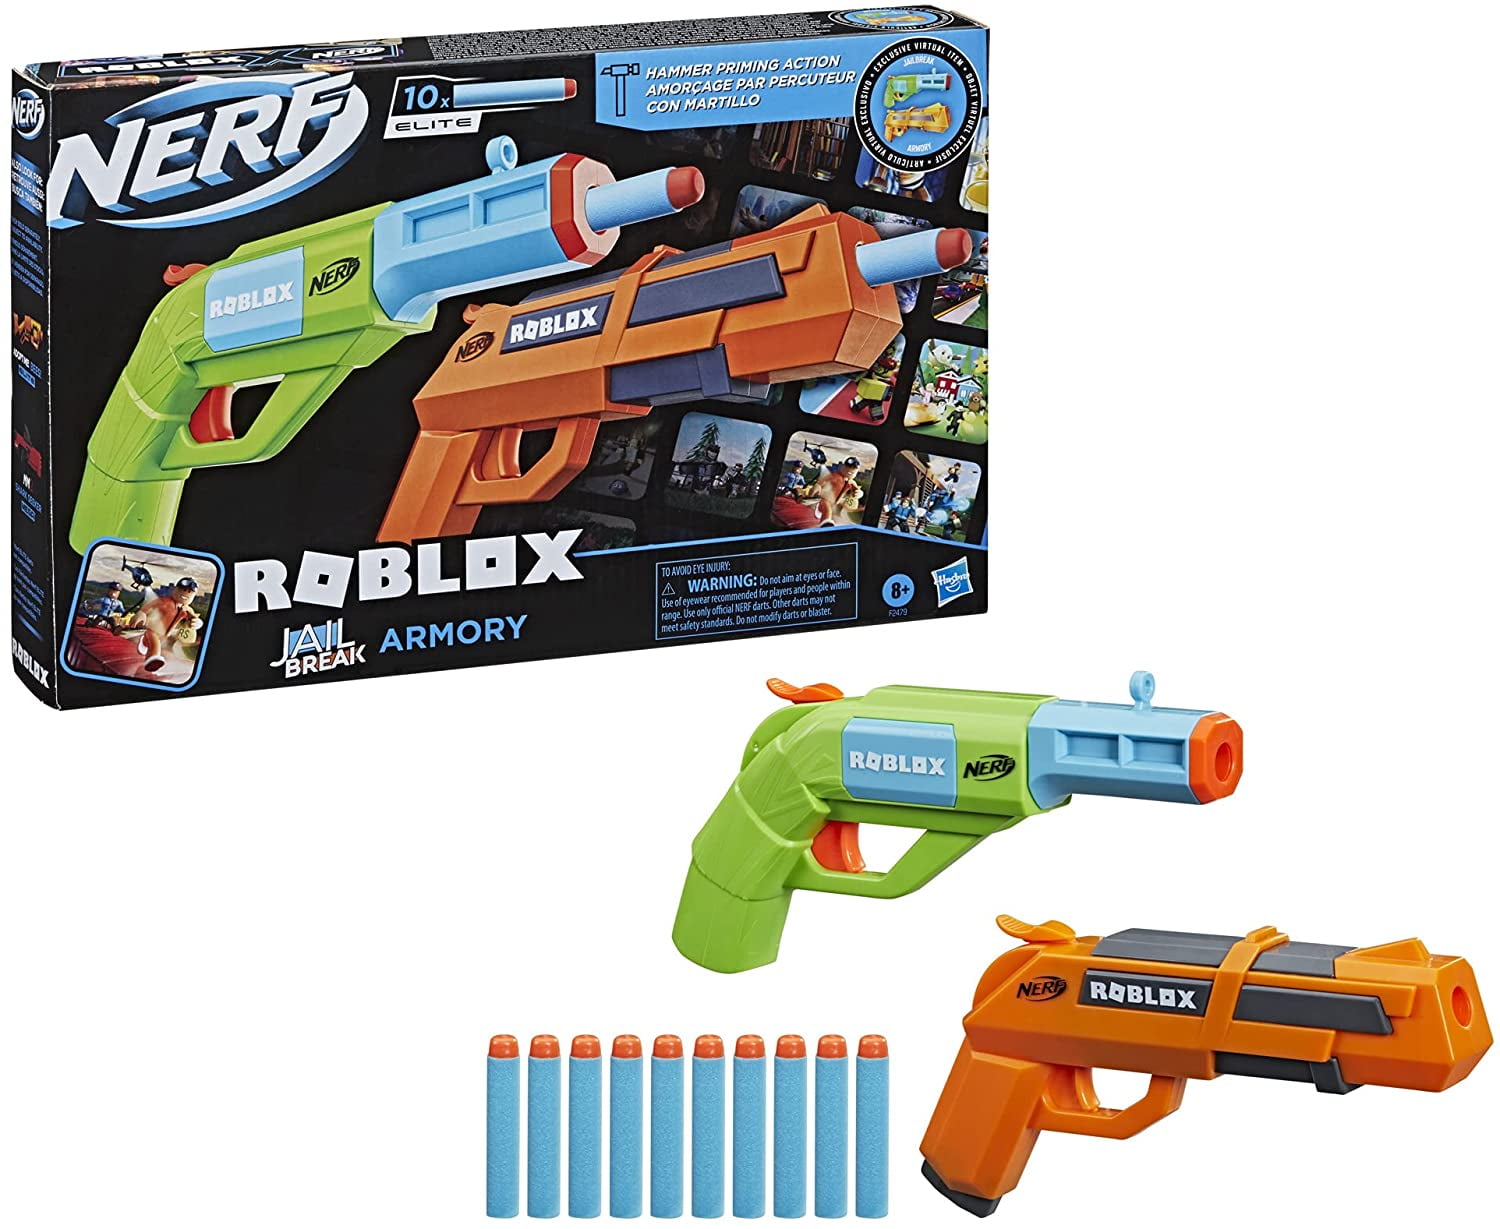 New Roblox nerf guns in a mall. : r/roblox